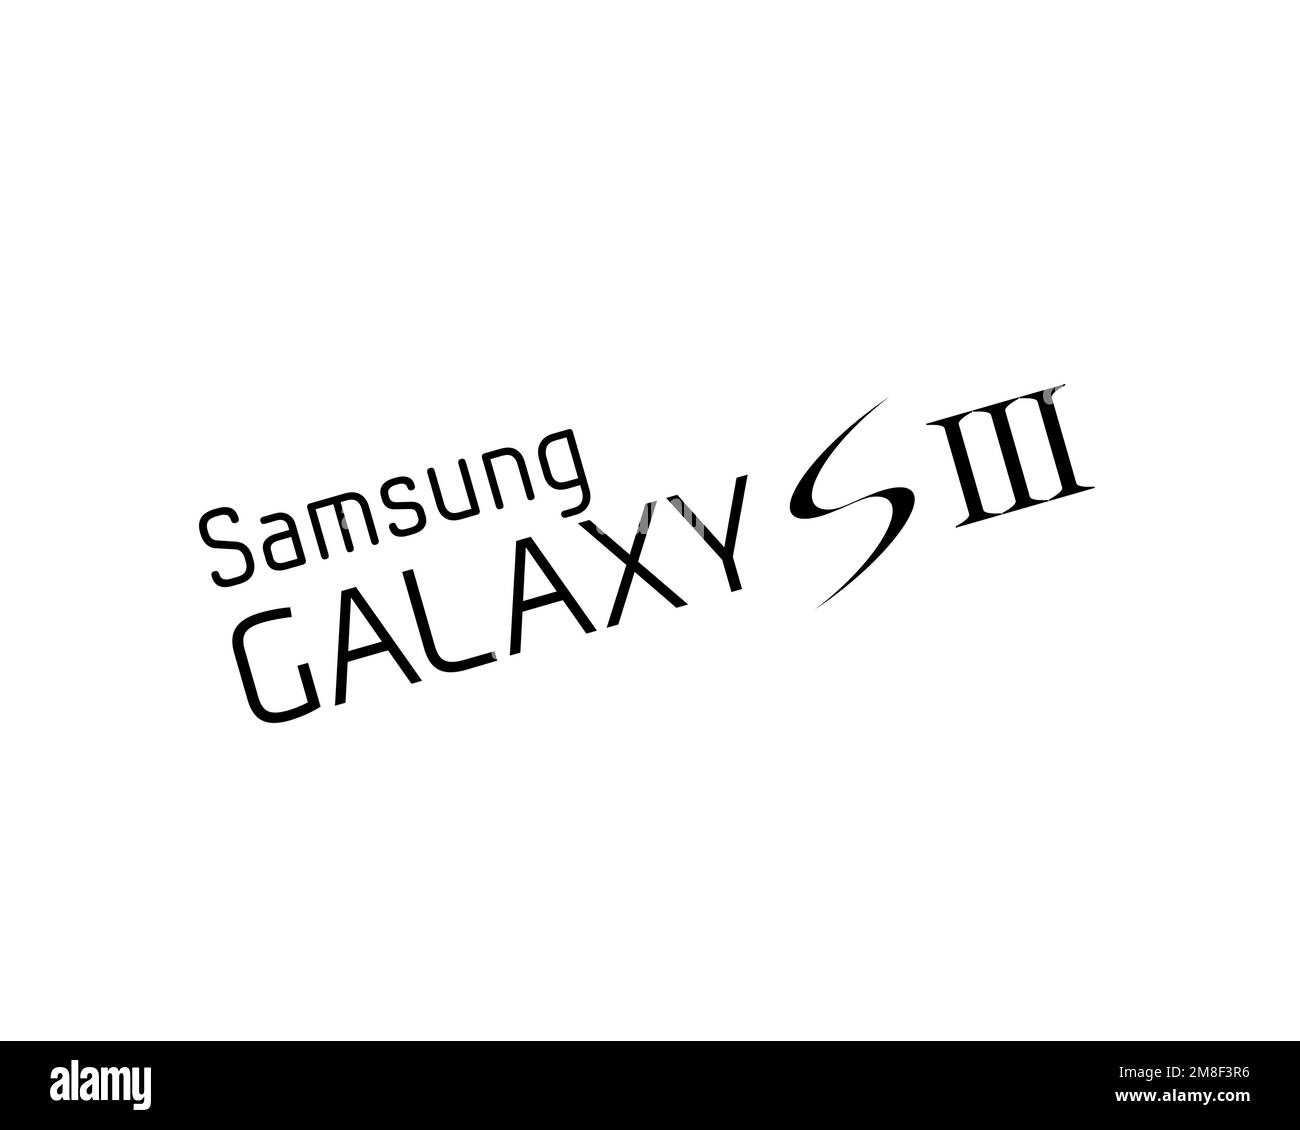 Samsung Galaxy S III, rotated logo, white background Stock Photo